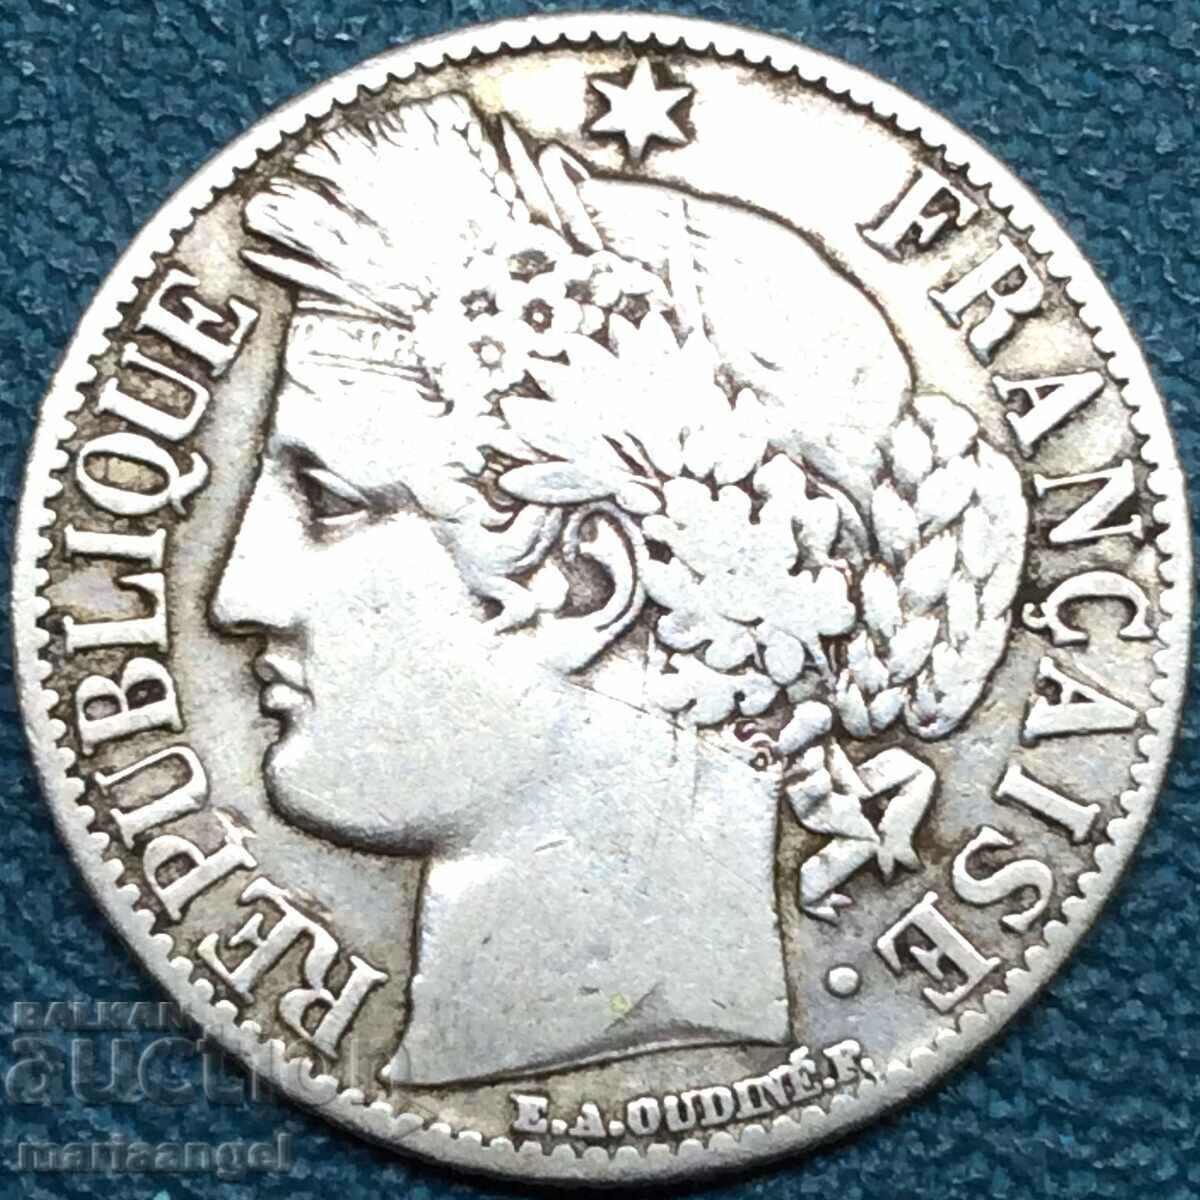 France 1 franc 1872 silver